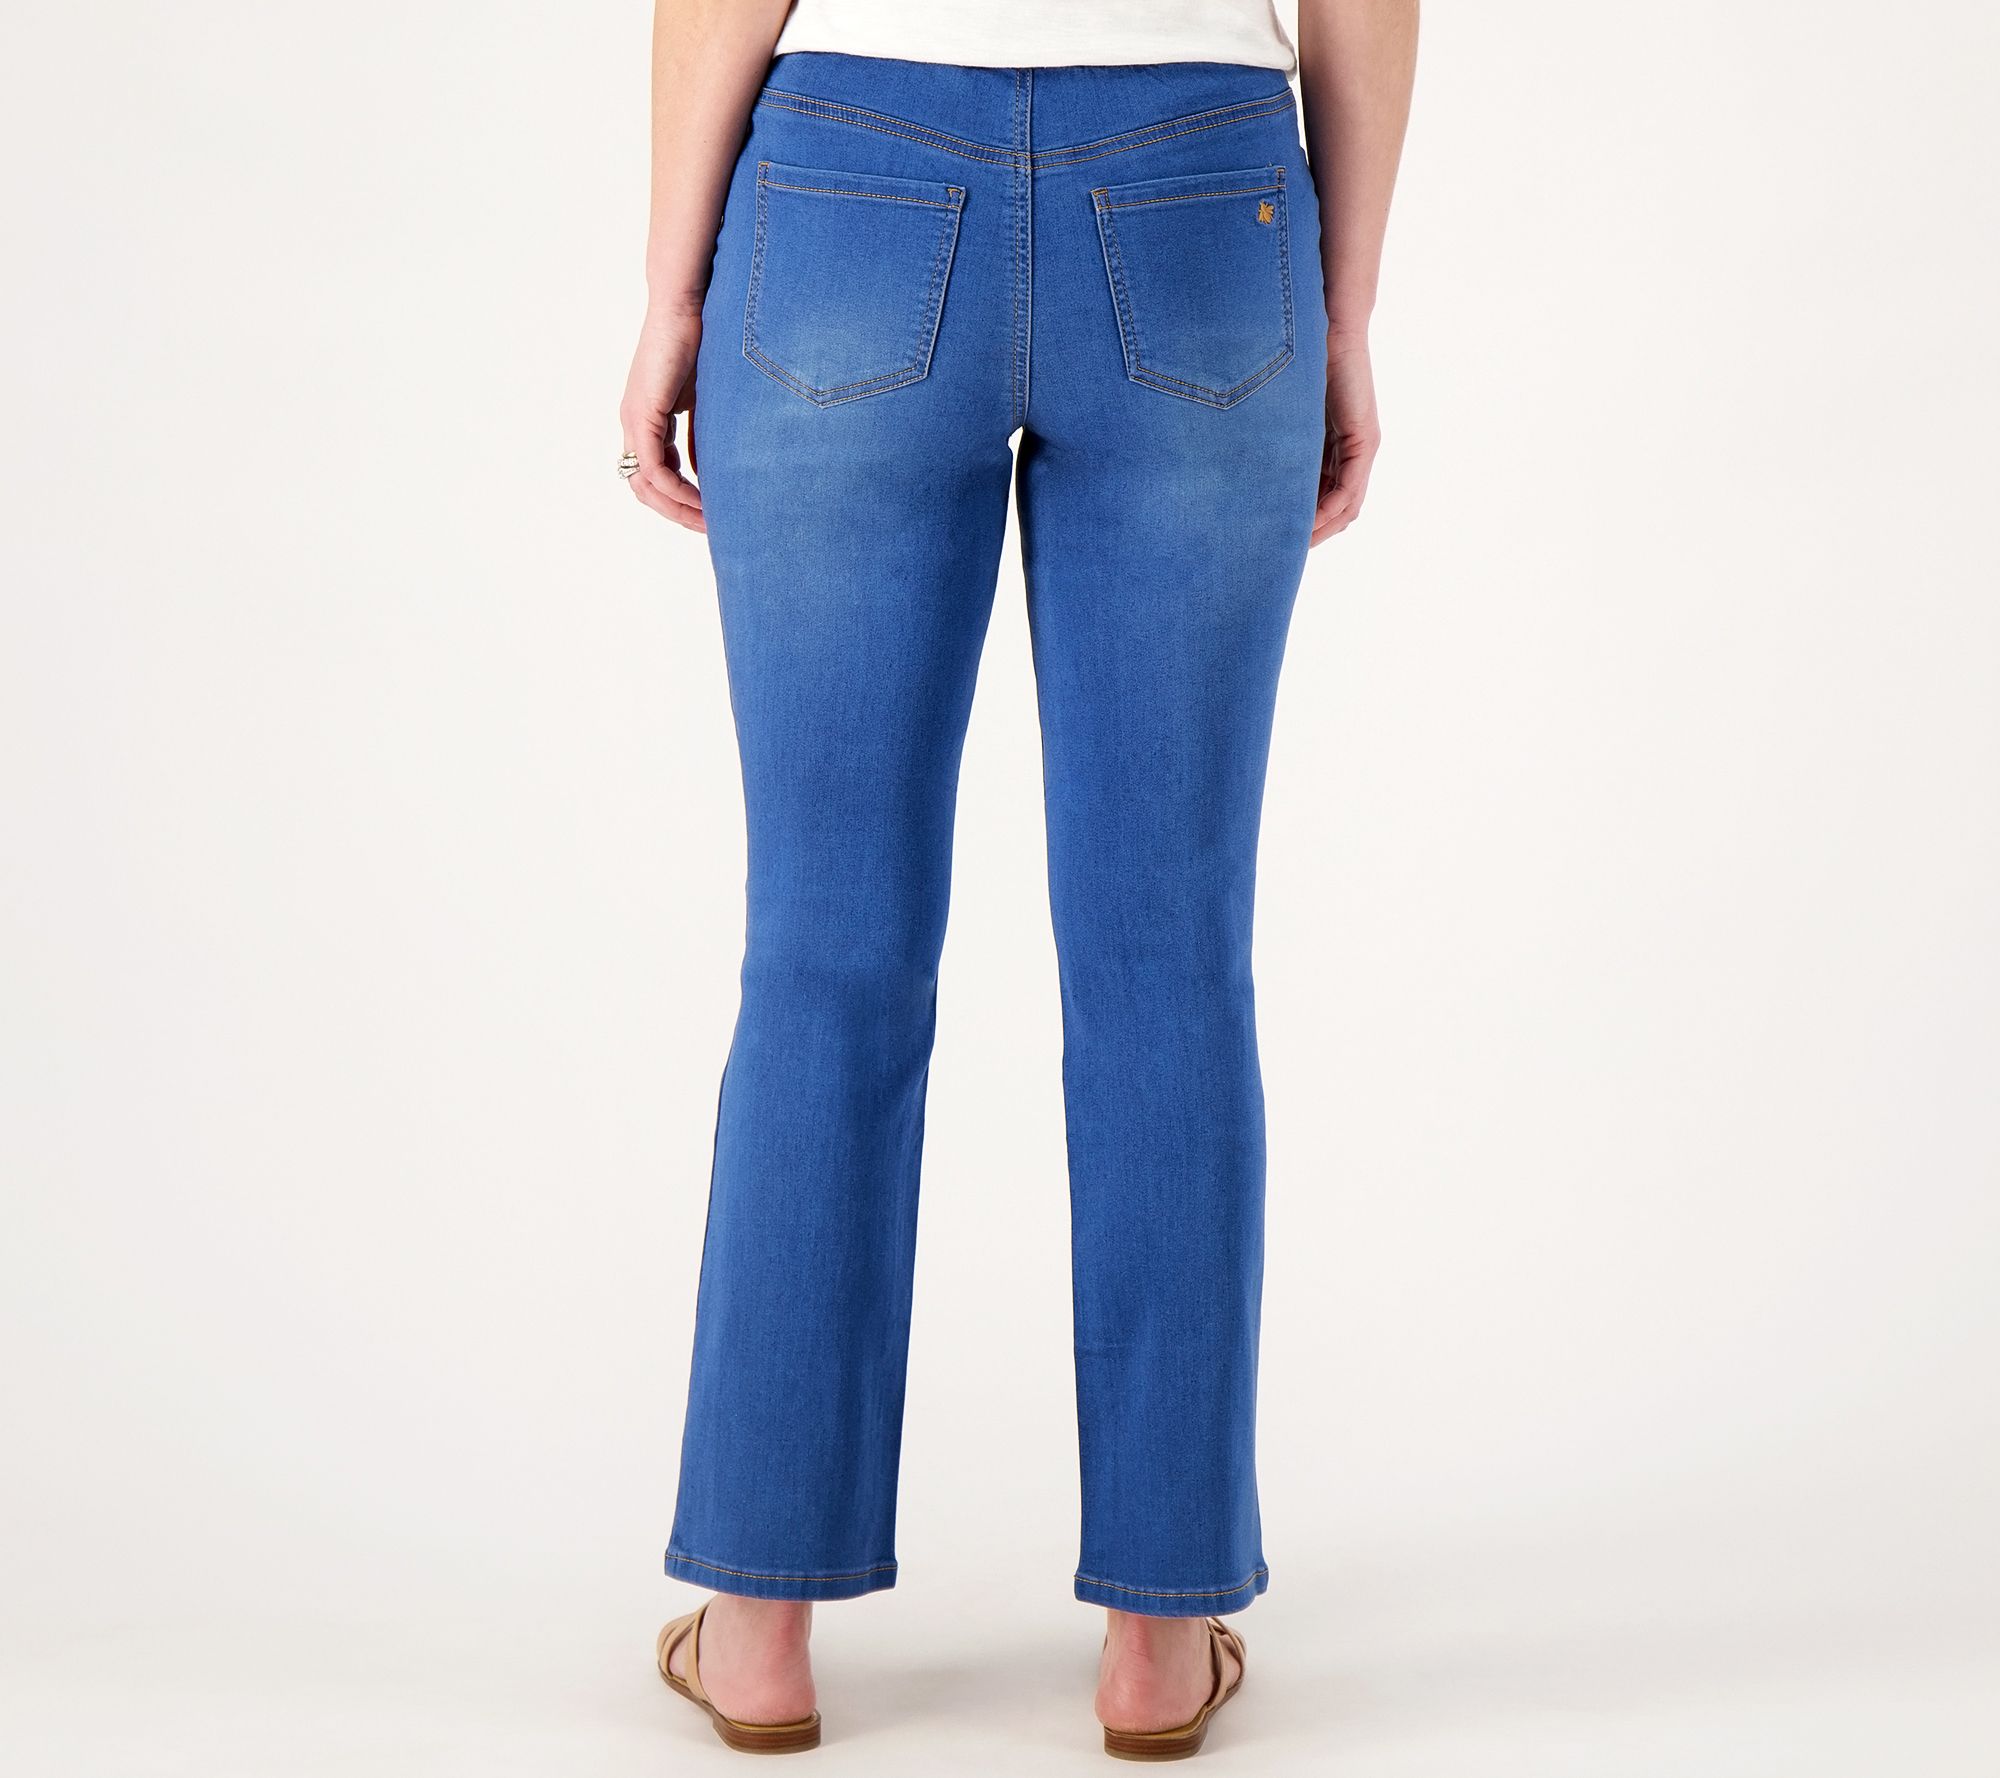 Joan Rivers Slim Bootcut Denim Jeans - QVC.com